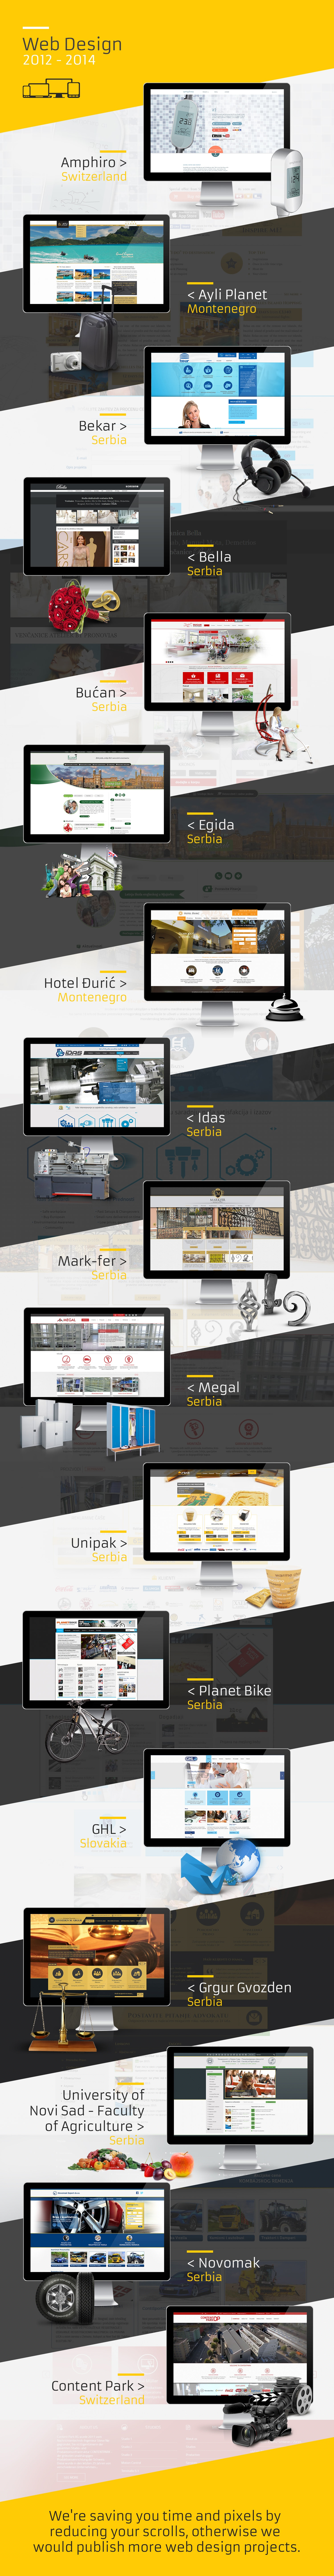 Webdesign portfolio 2013-2014